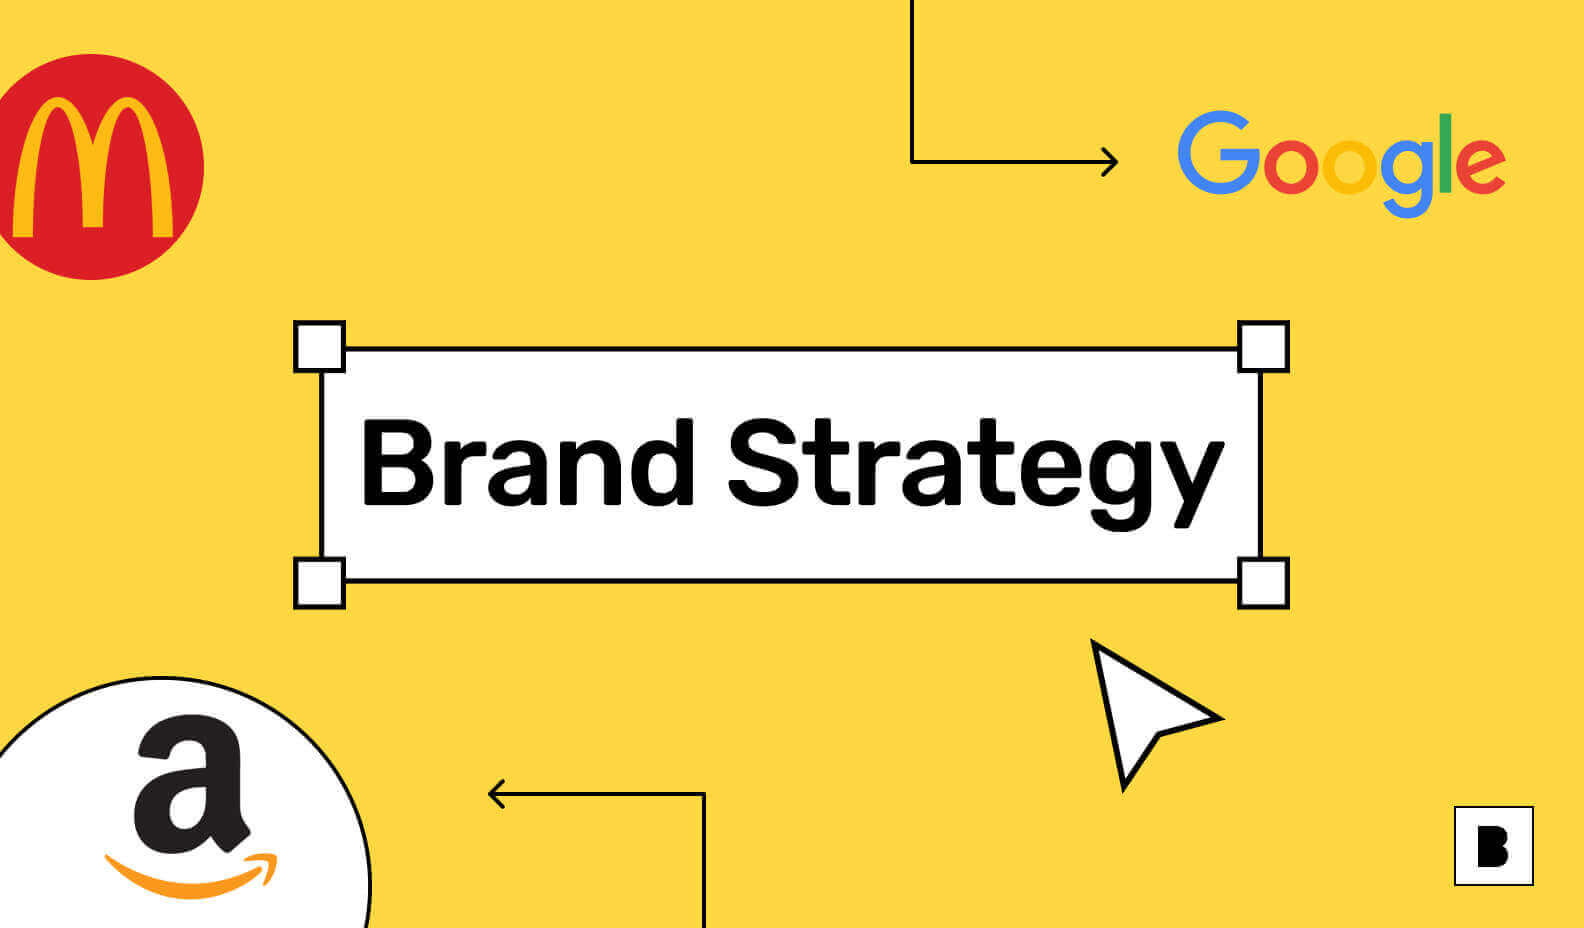 Brand strategy